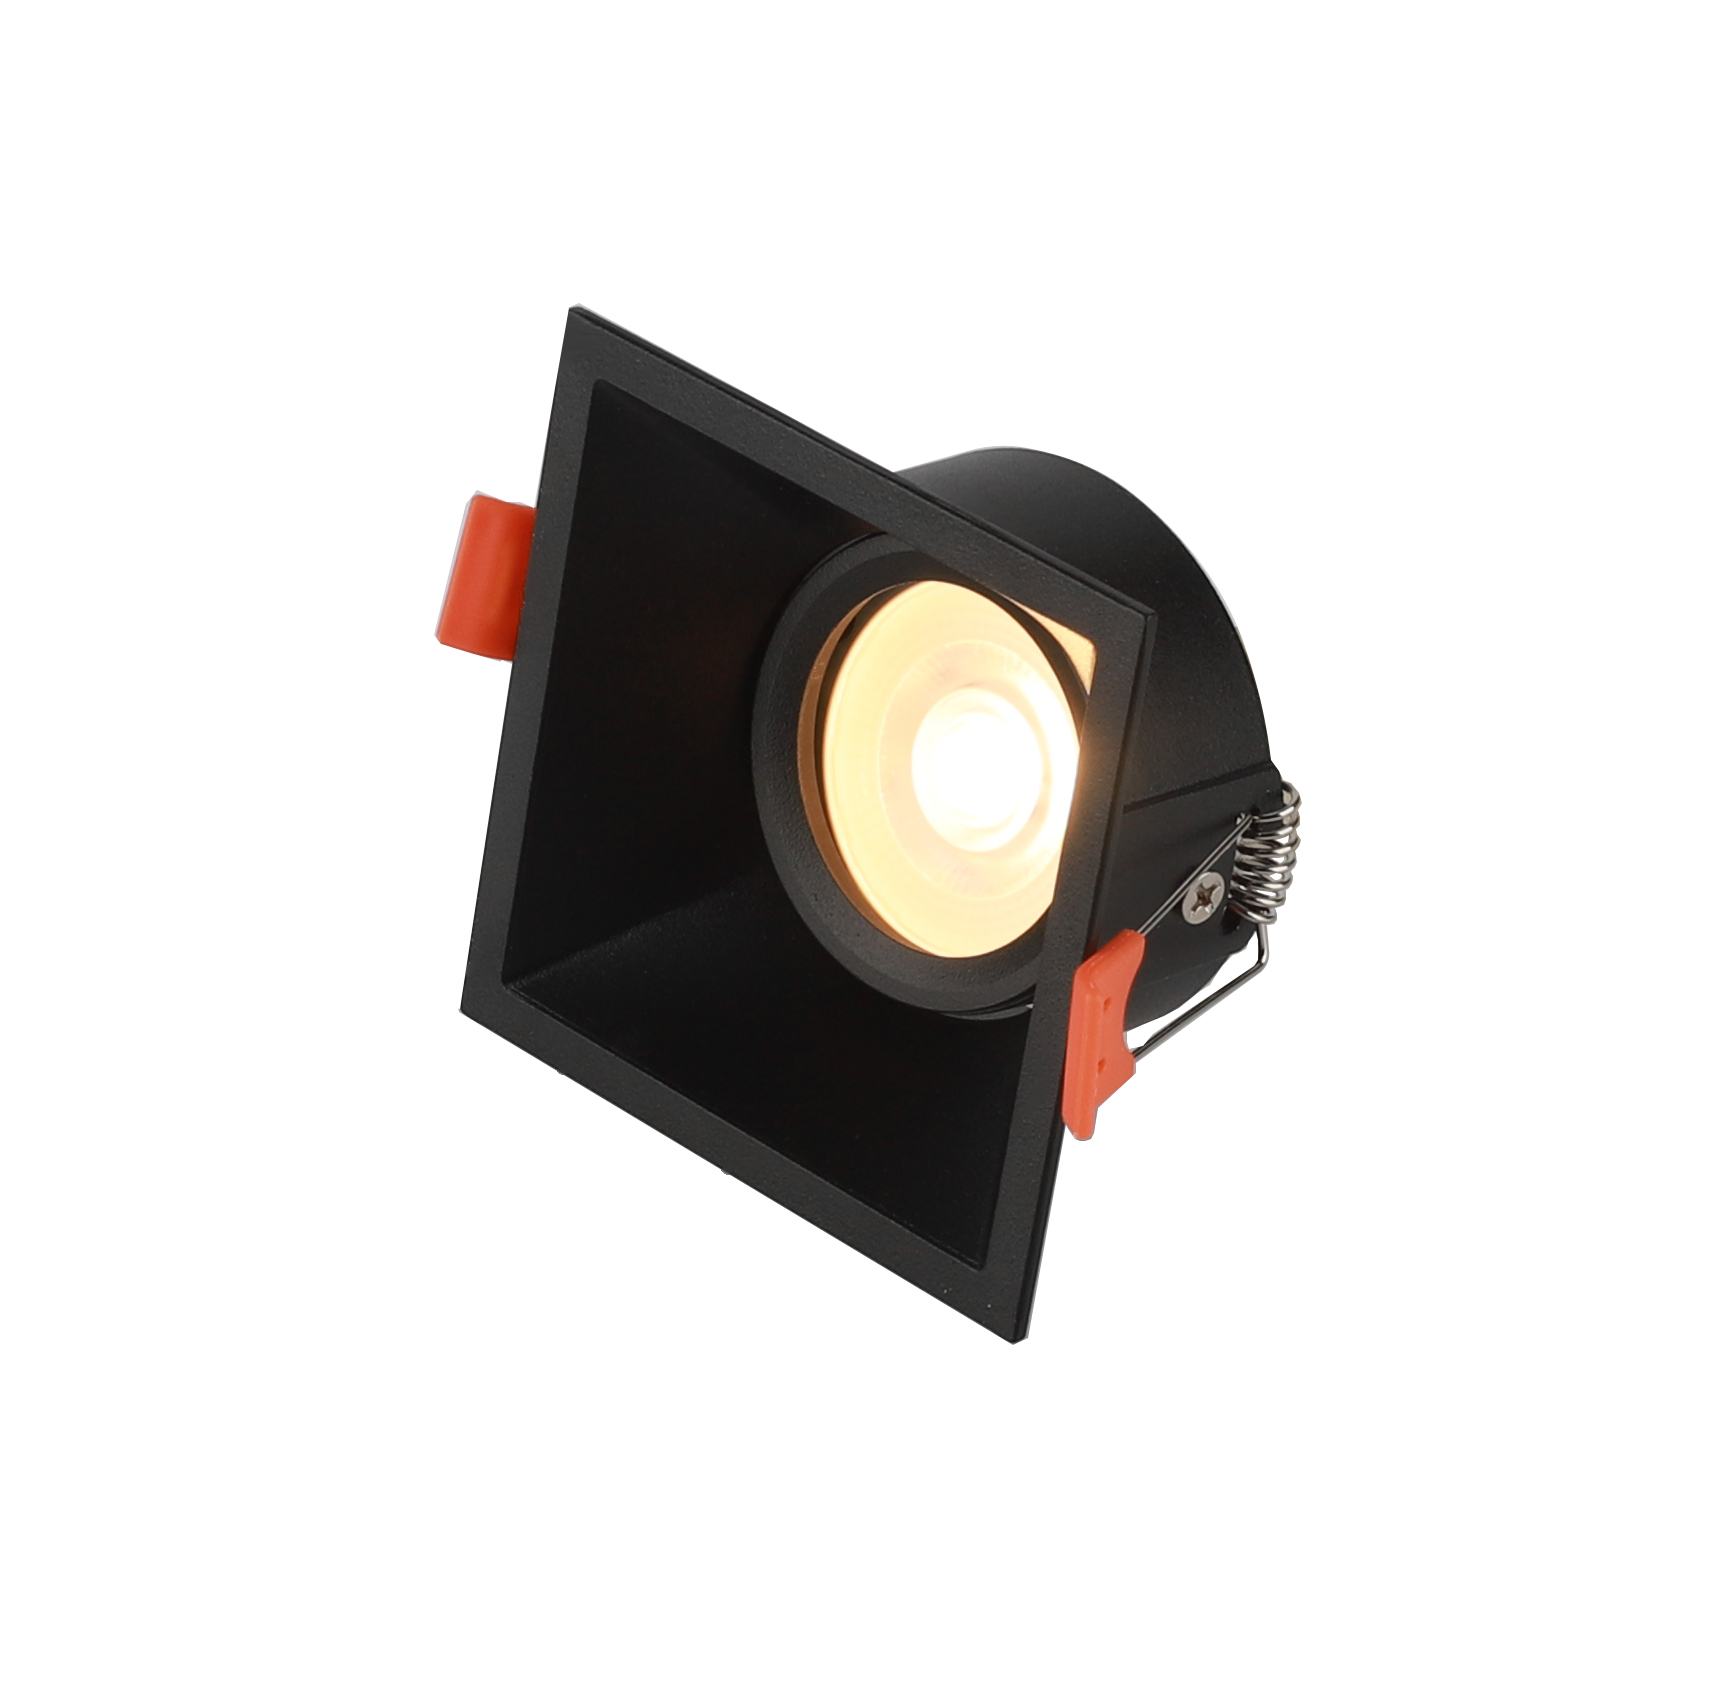 LED Downlight Fixture Square Light Frame